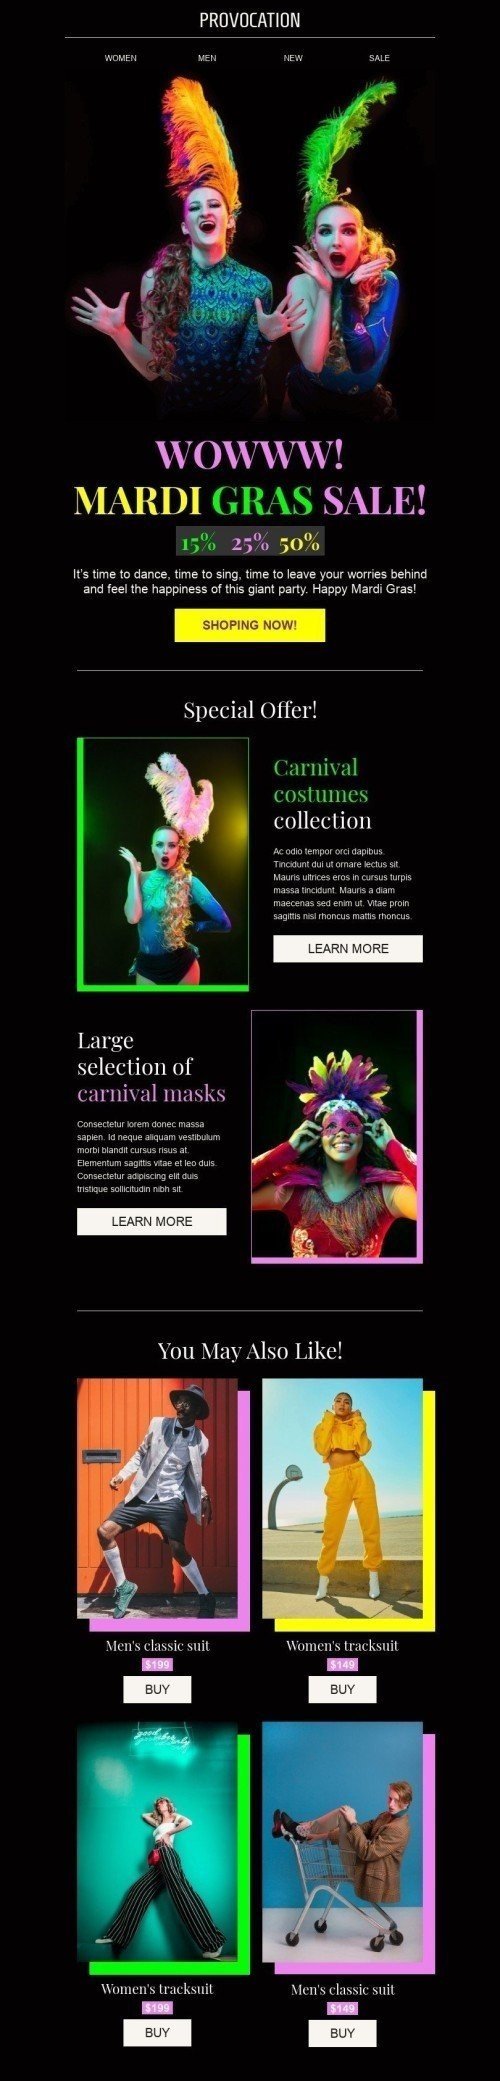 Mardi Gras Email Template «Mardi Gras Sale» for Fashion industry desktop view